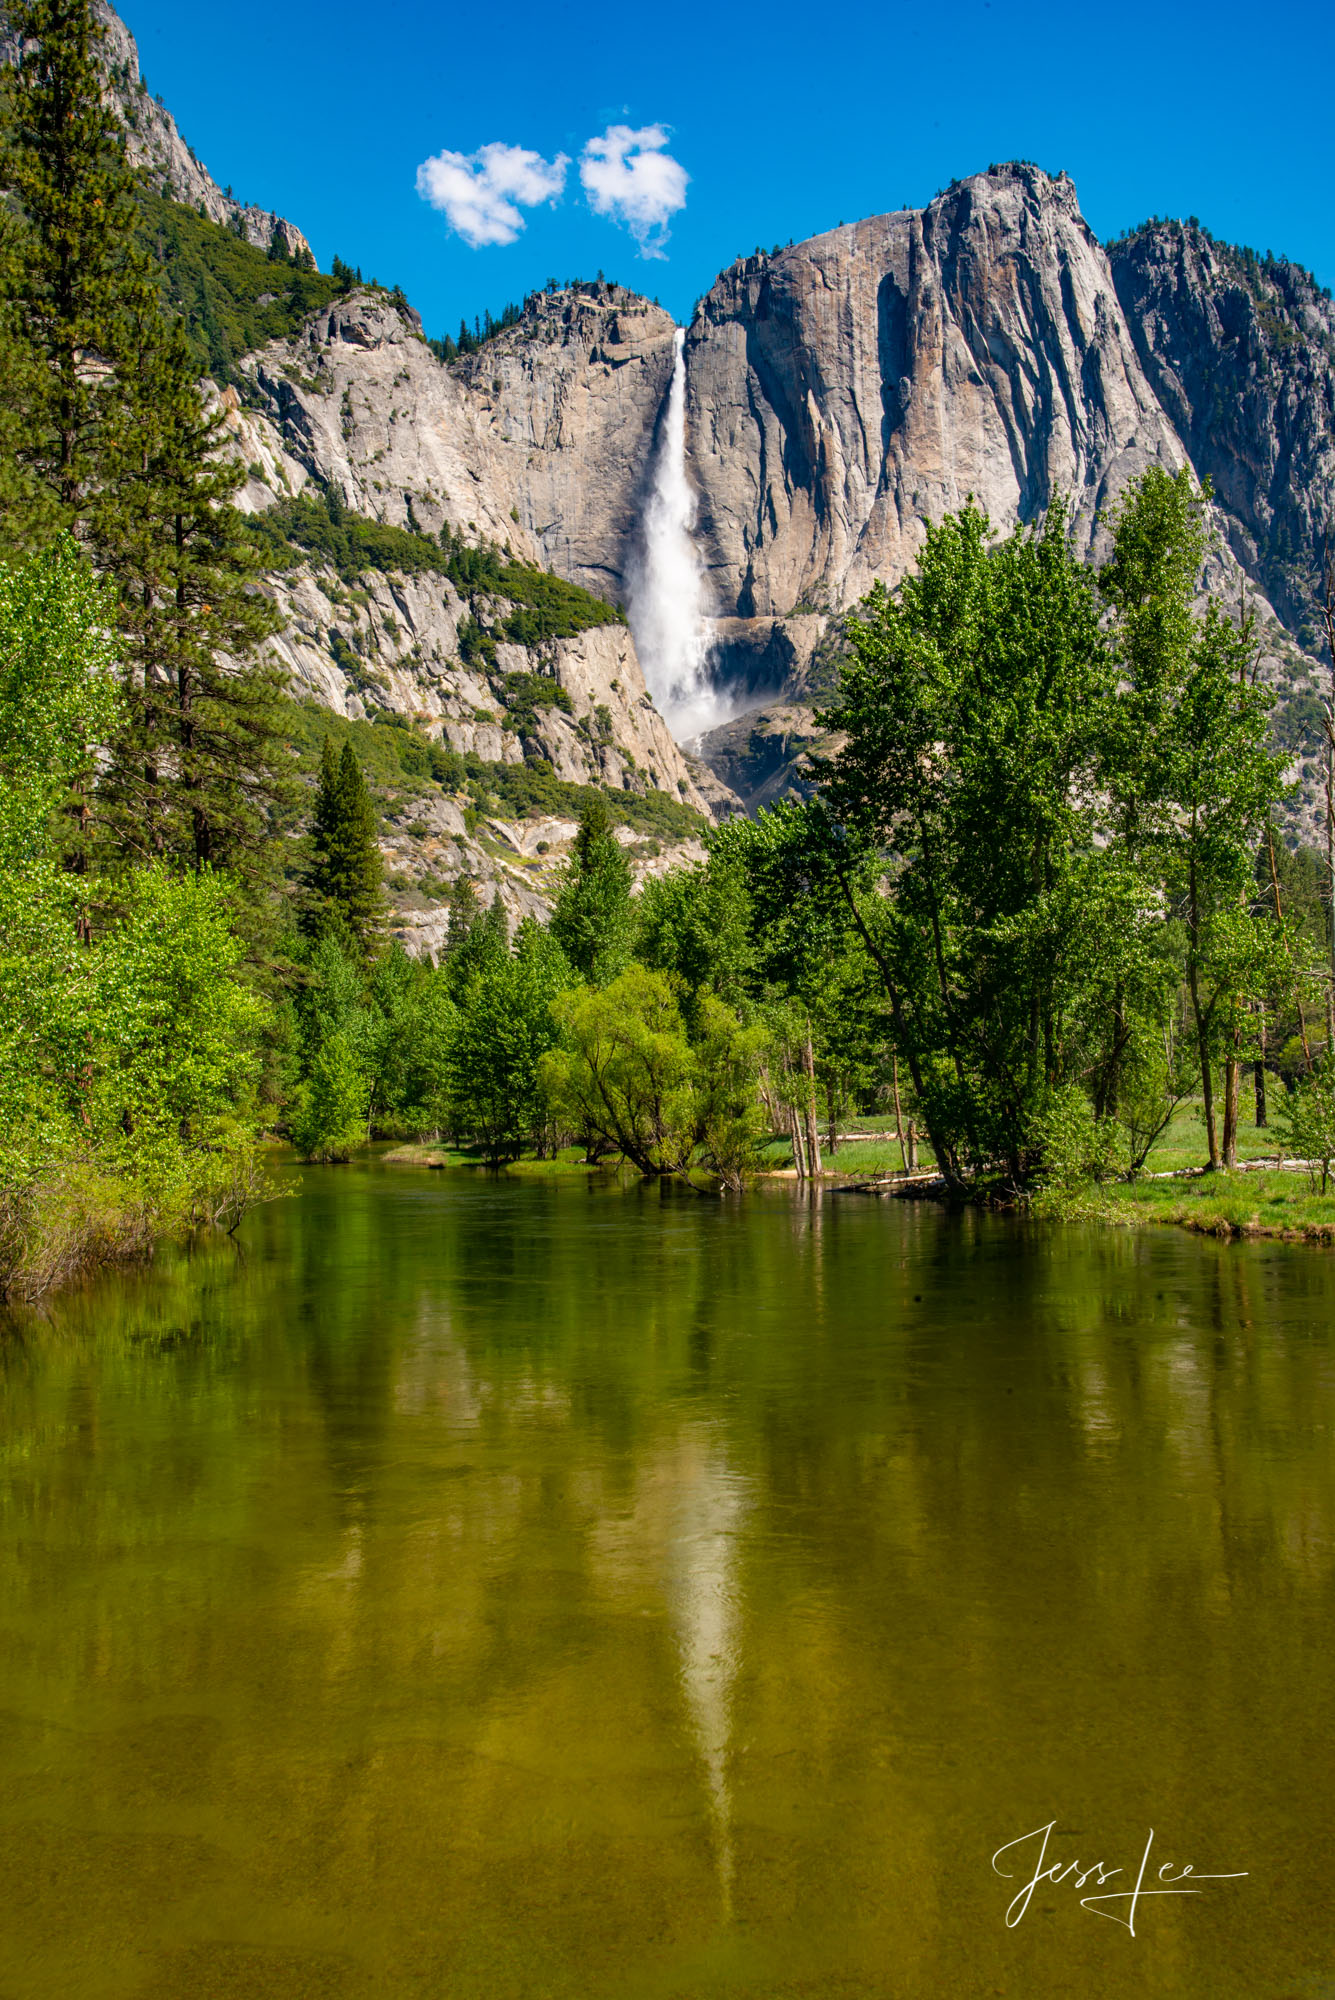 Fine Art Limited Edition Photo Print of the Merced River and Yosemite Falls, California. A beautiful California Landscape photo...